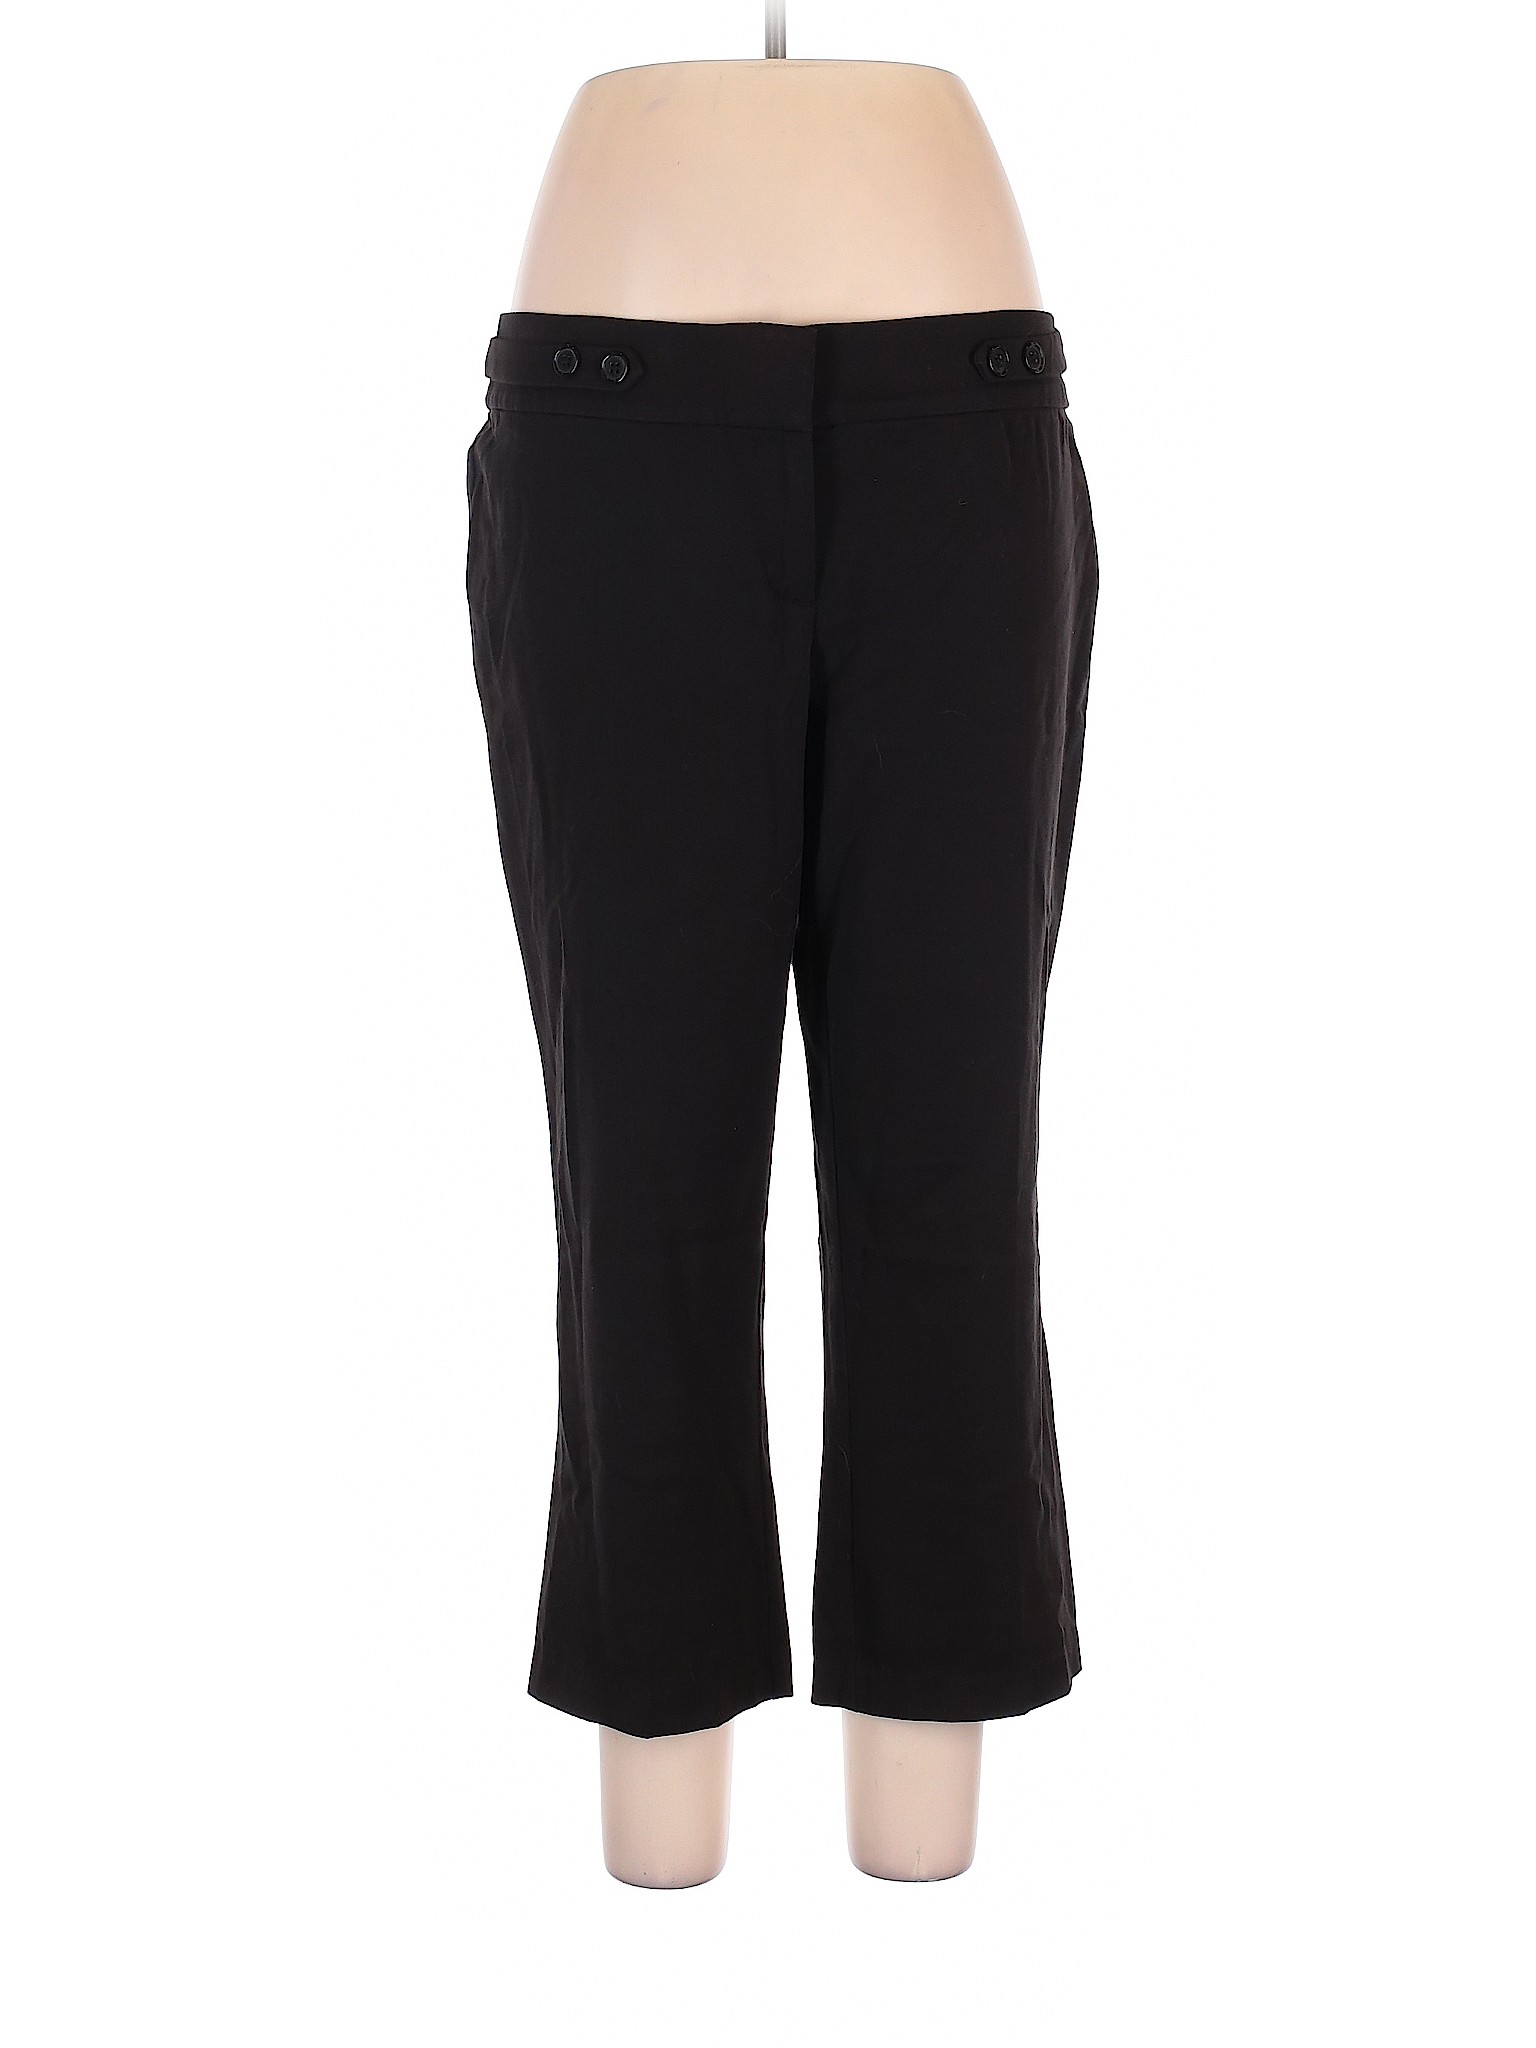 Maurices Women Black Dress Pants 11 | eBay